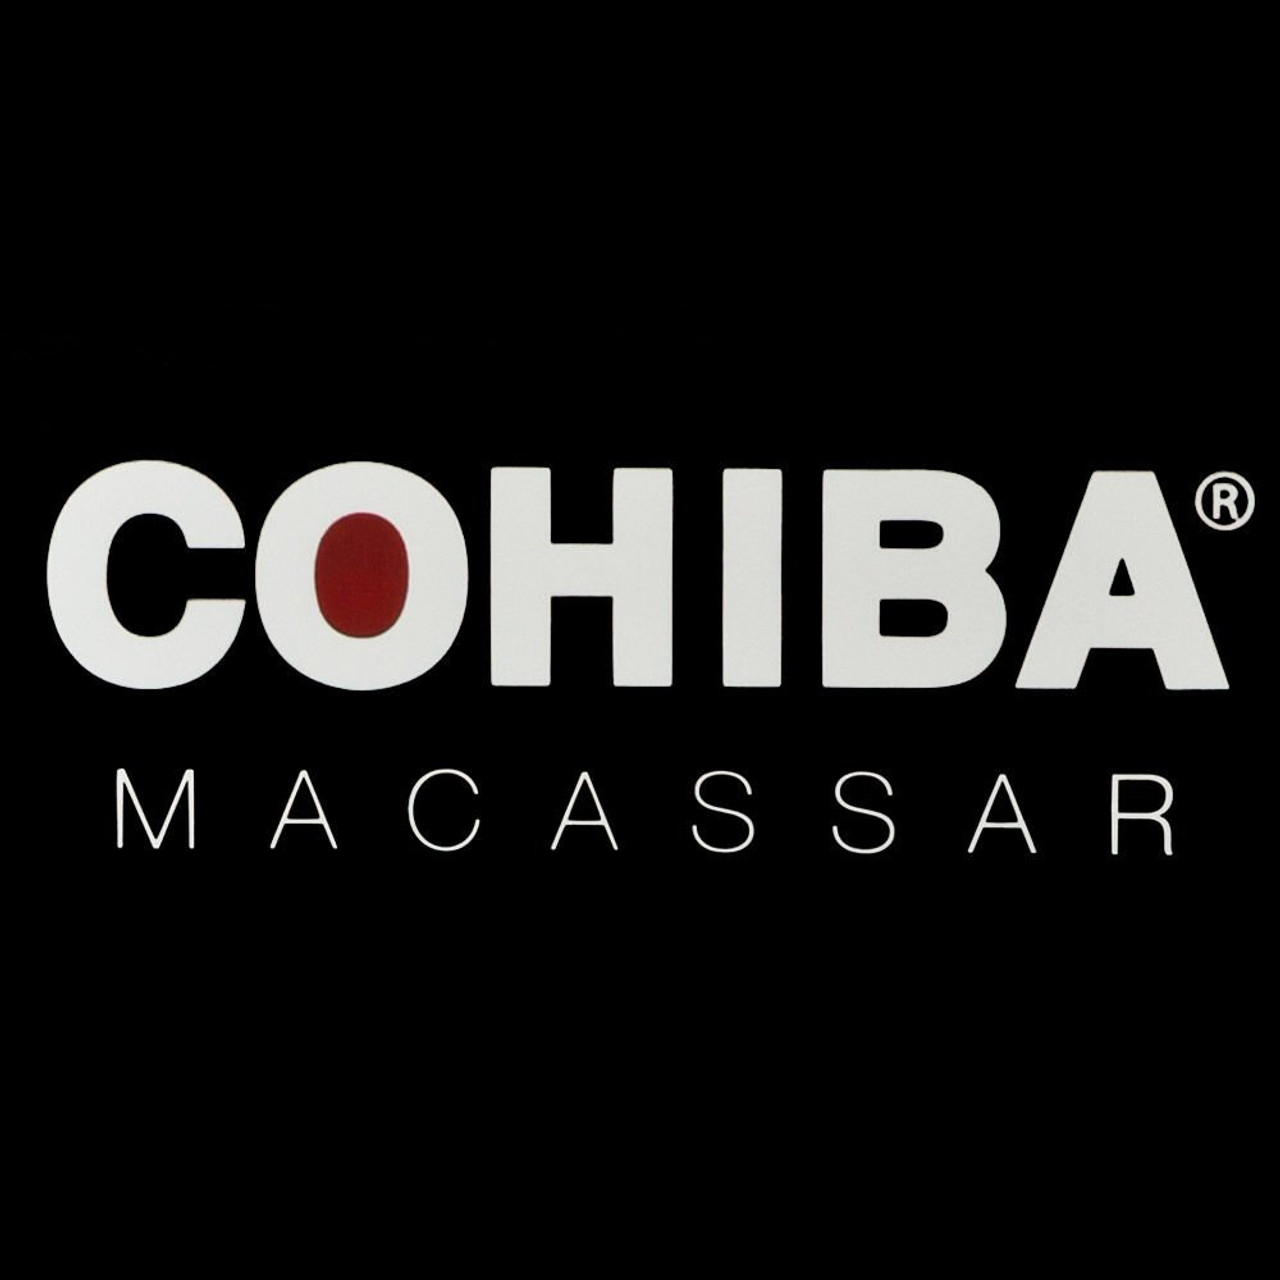 Cohiba Macassar Logo